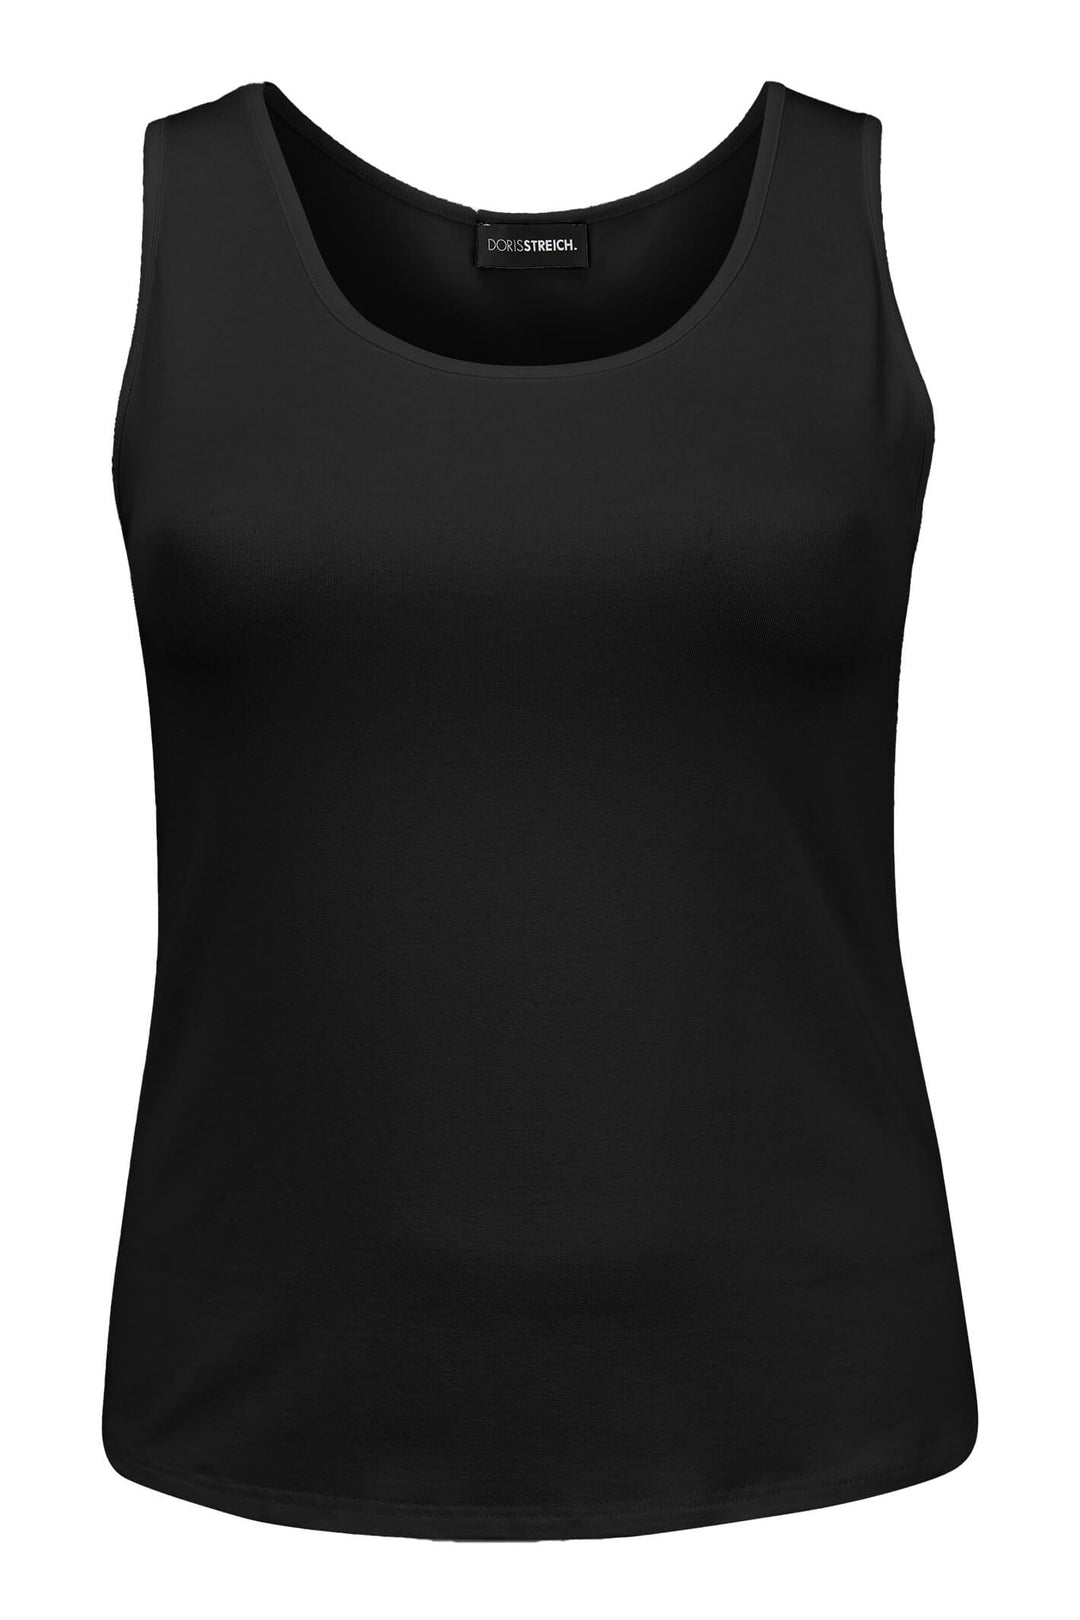 Doris Streich 351 270 99 Black Cami Vest Top - Shirley Allum Boutique